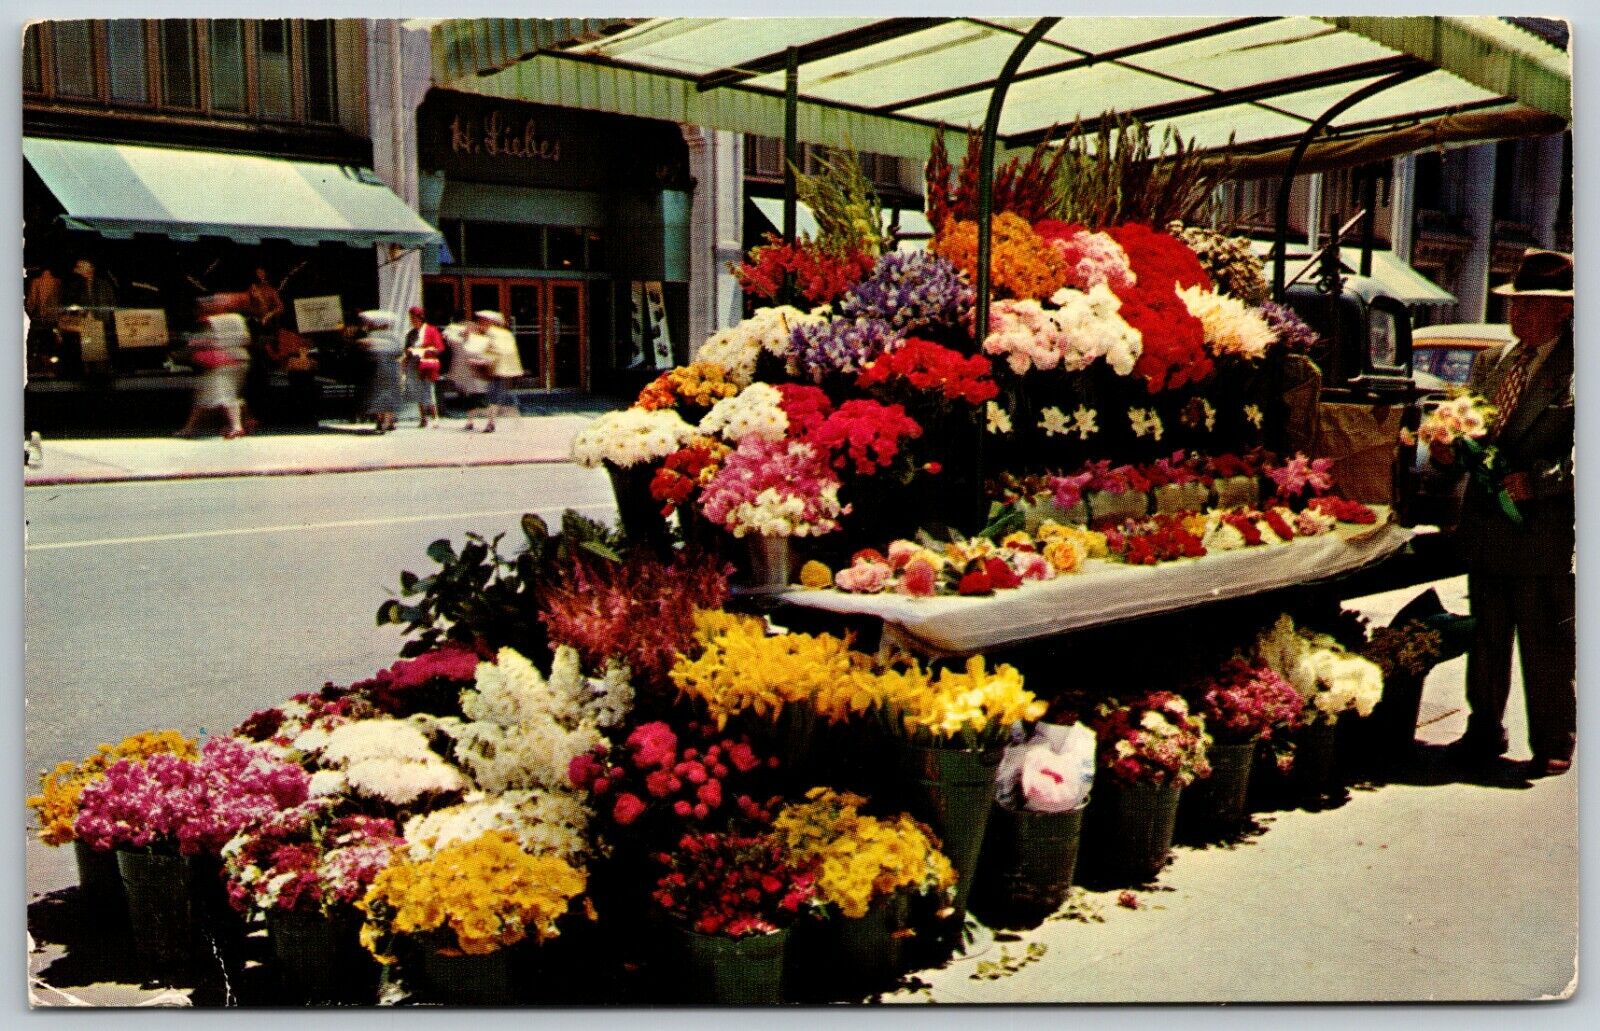 Sidewalk Flower Stands, San Francisco, California - Postcard